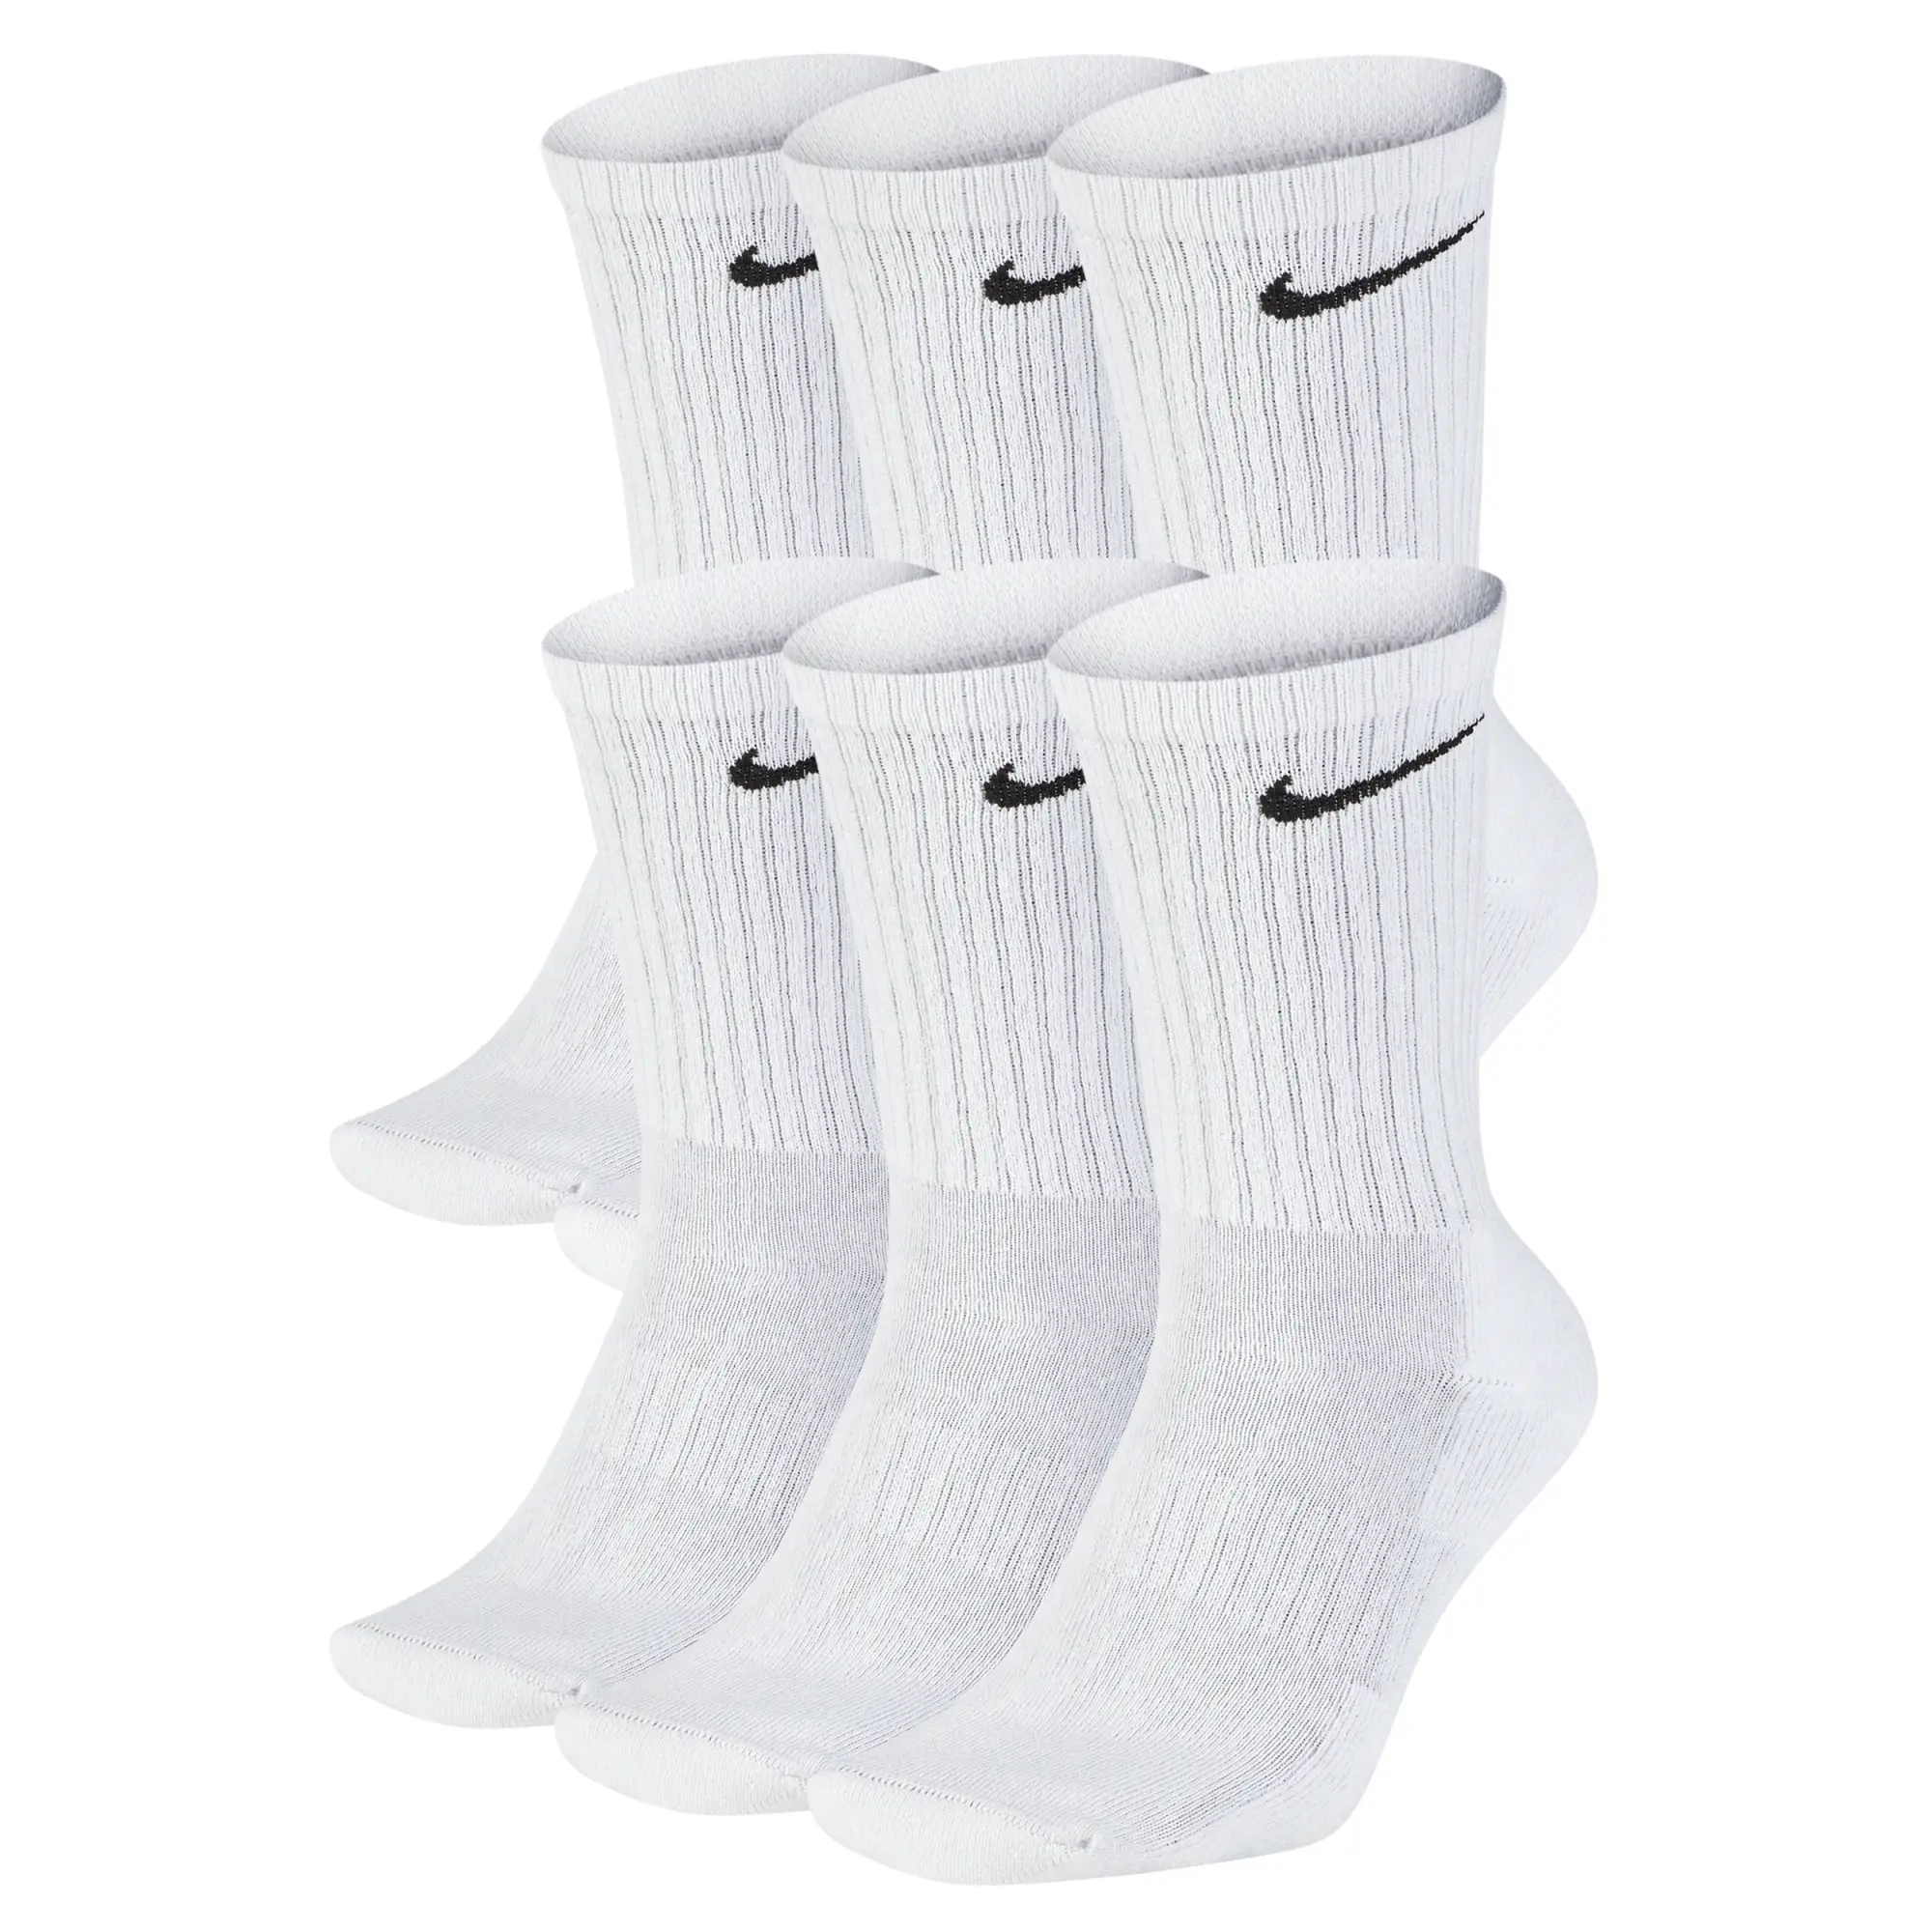 Nike Men's Cotton Cushion Crew Sock - 6 Pack White/Black